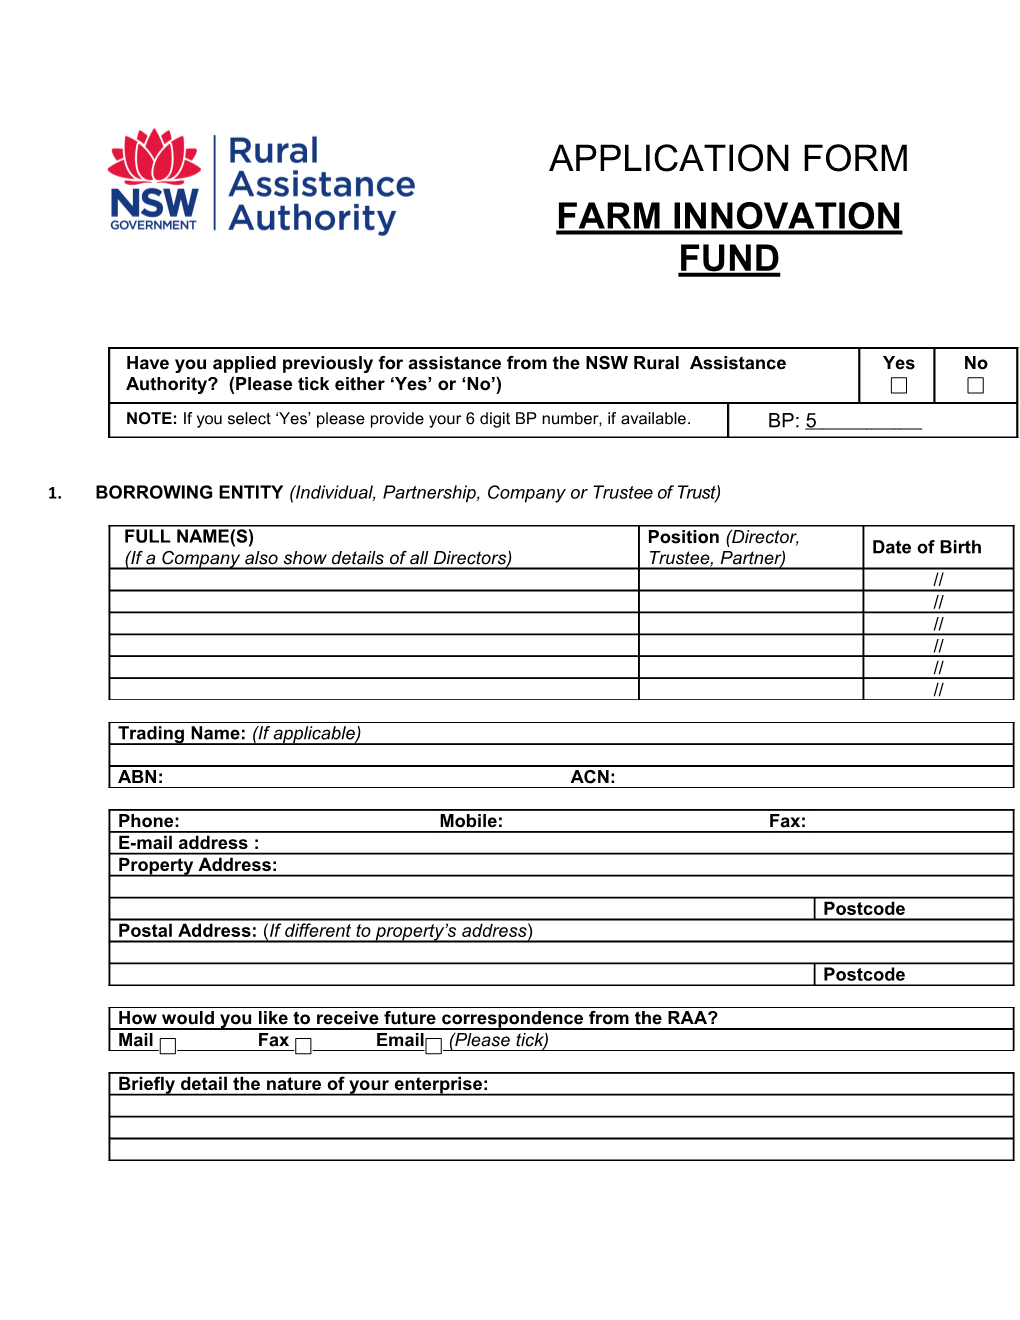 Application - Farm Innovation Fund